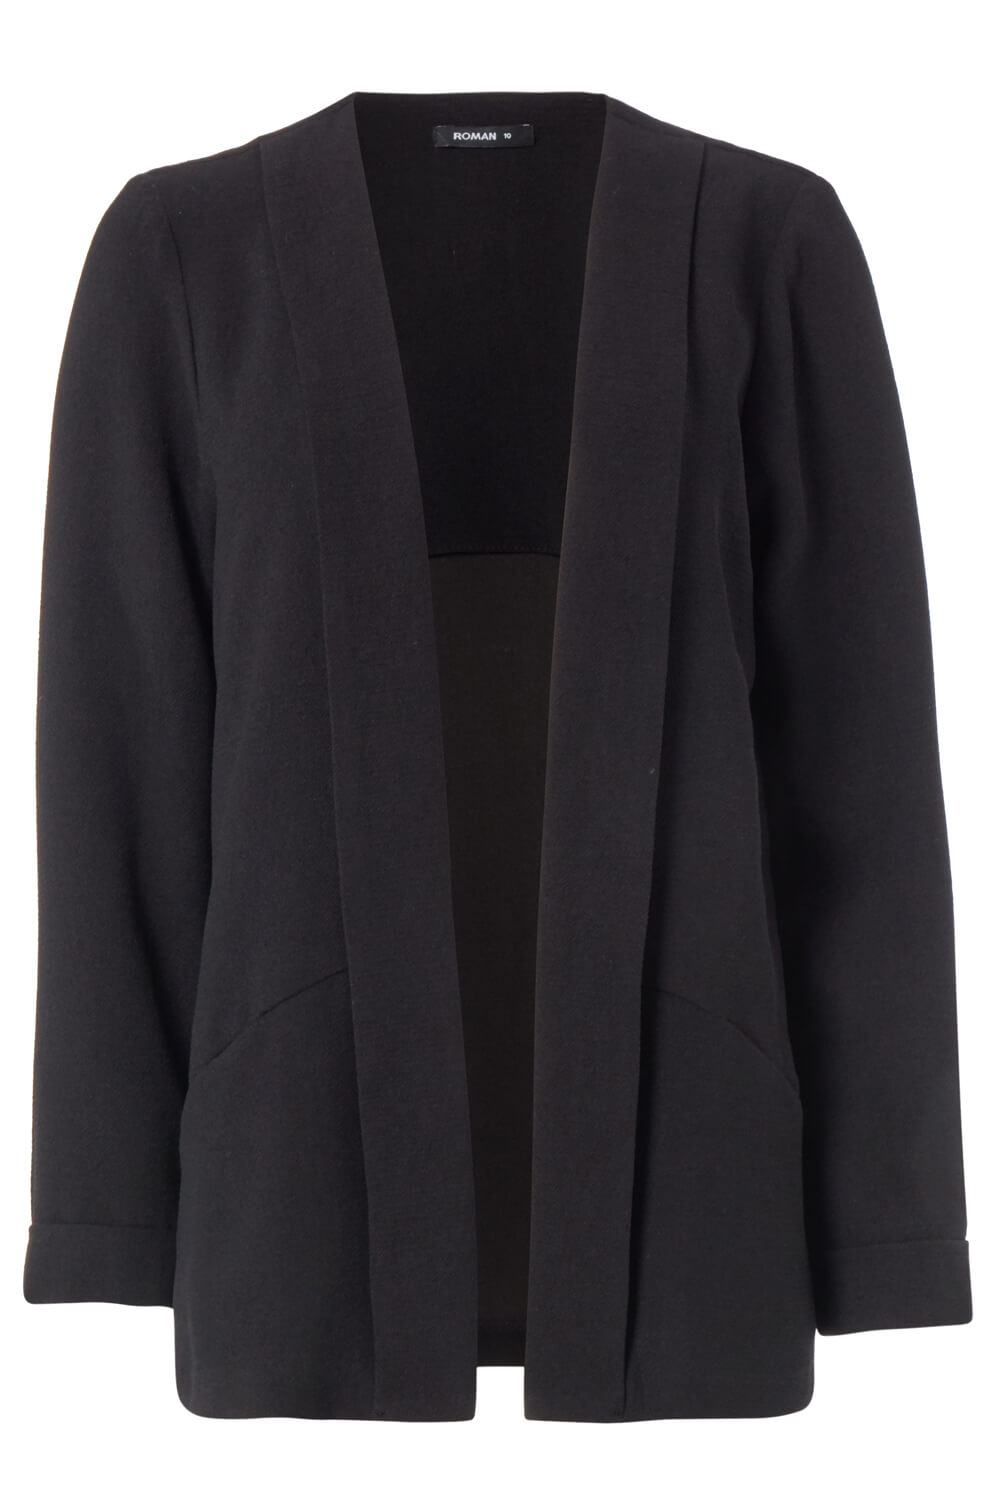 Black Long Sleeve Crepe Jacket, Image 5 of 5